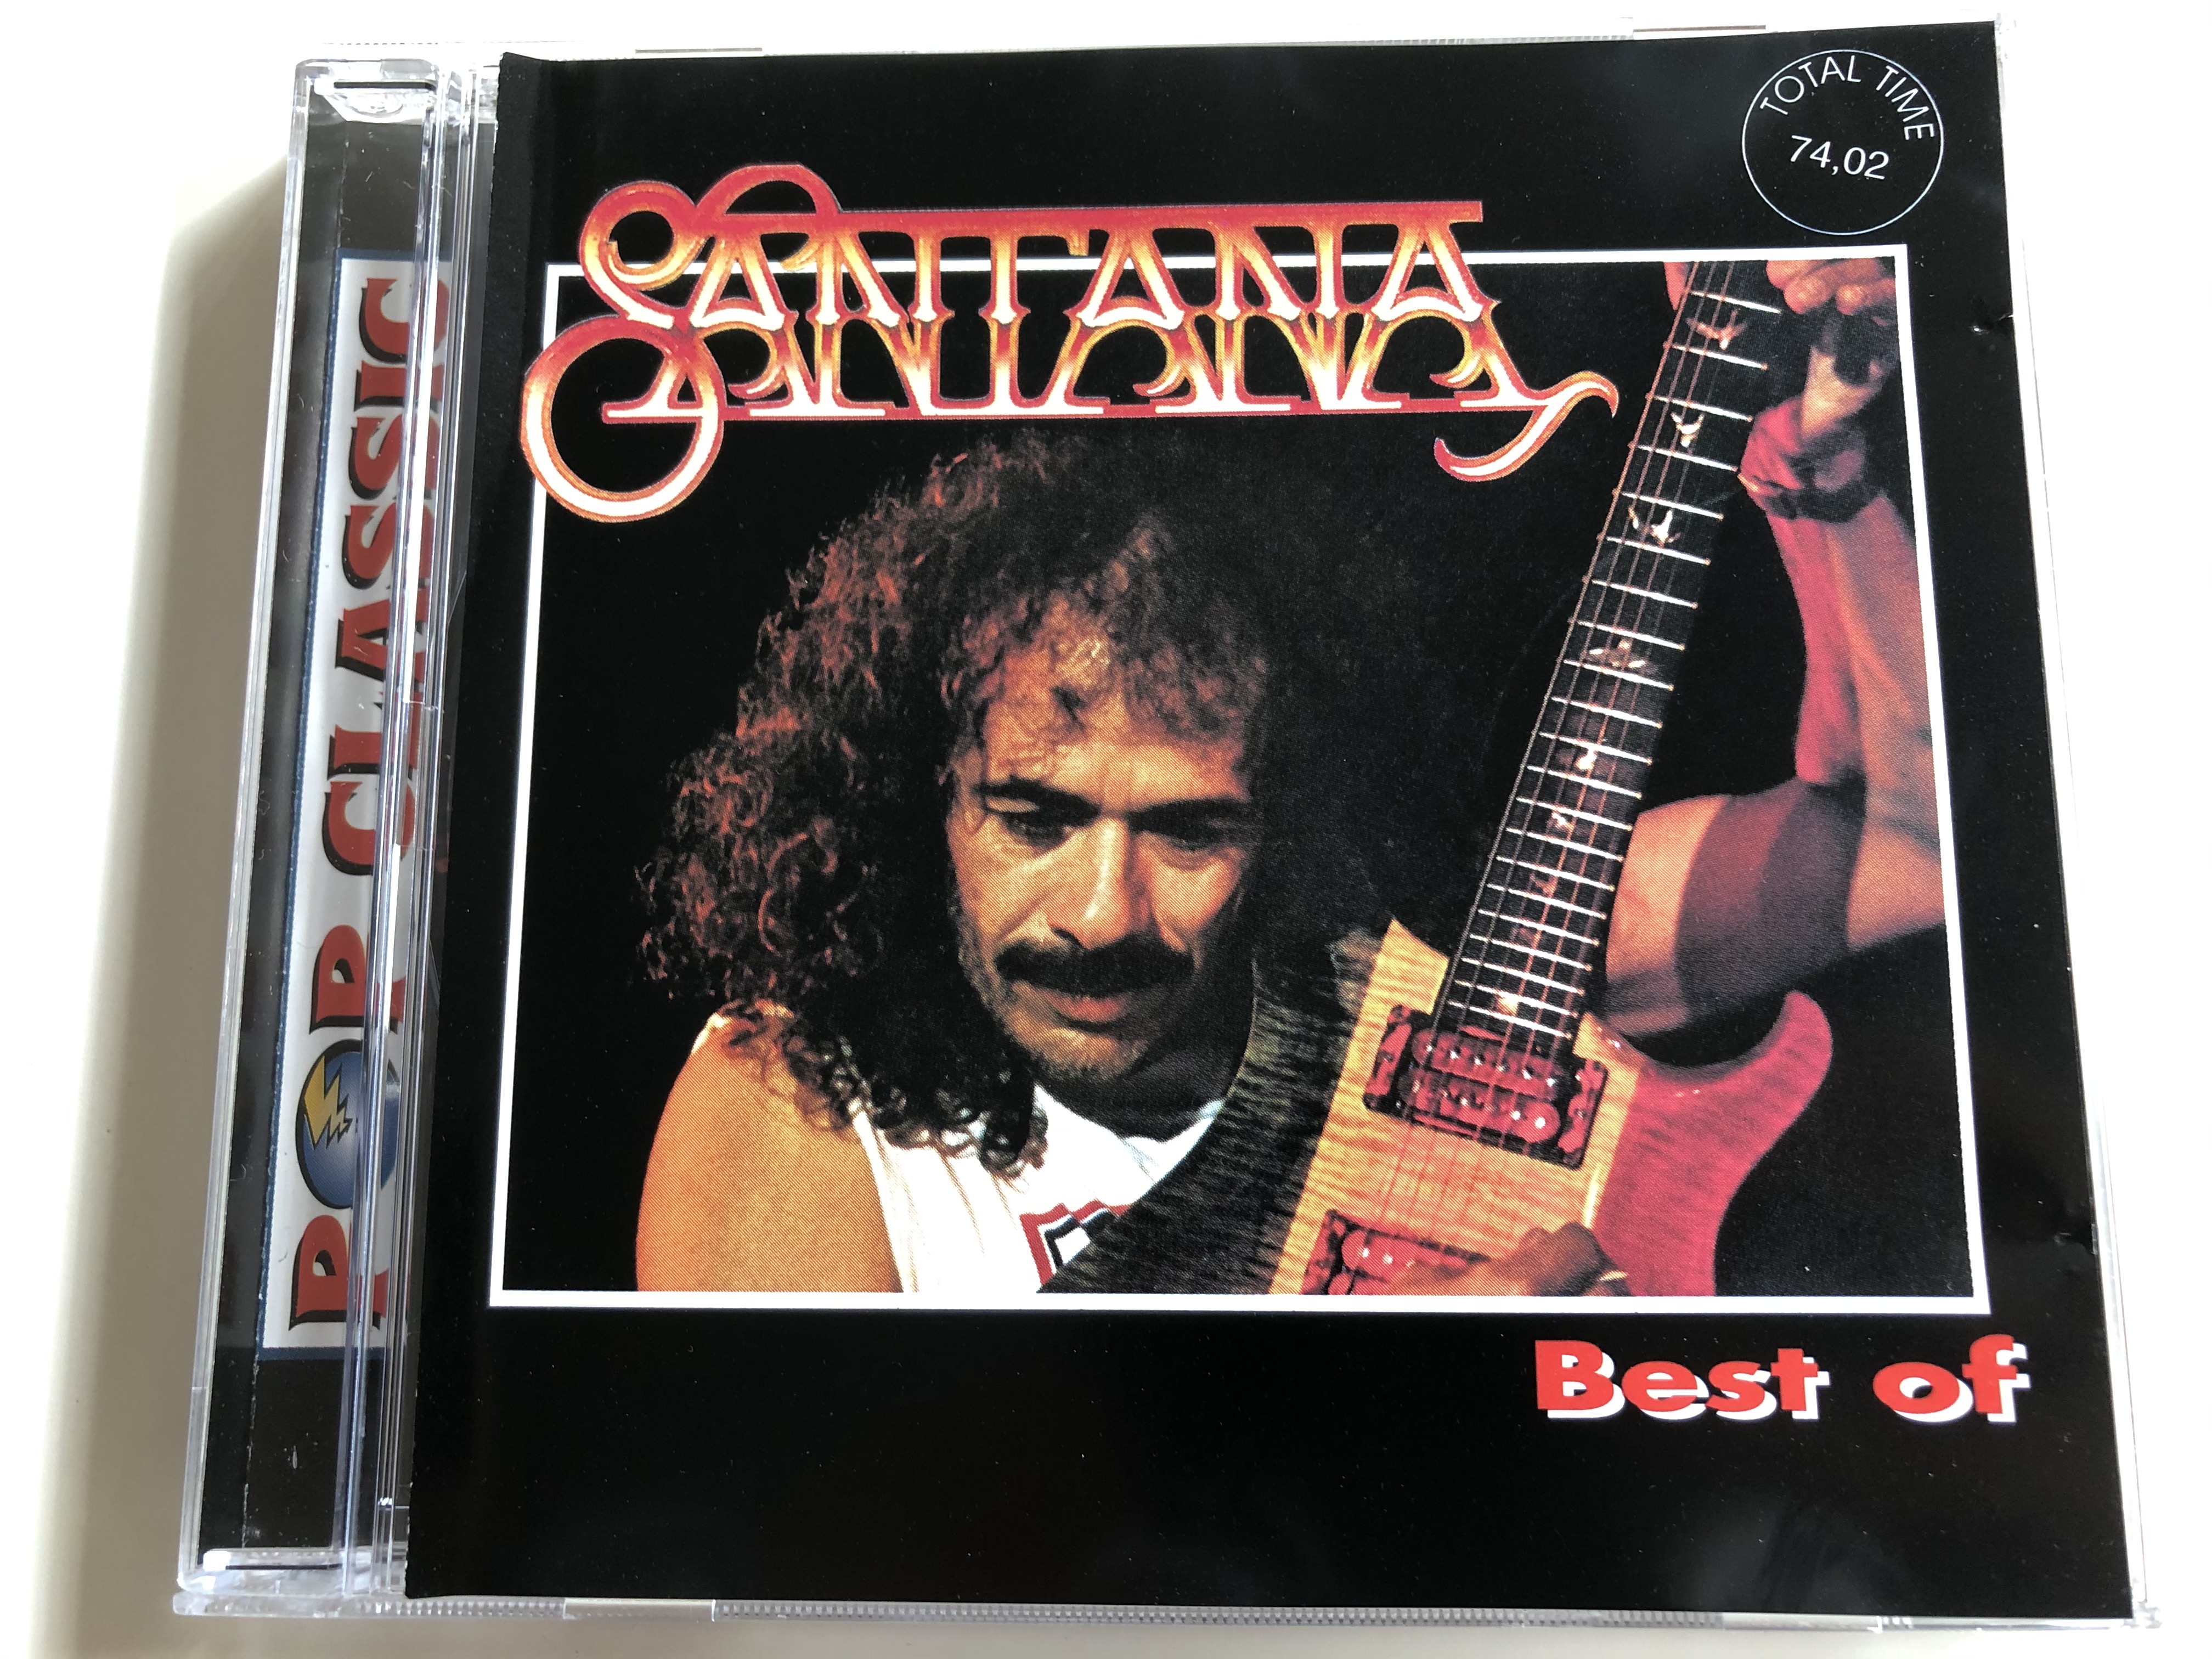 santana-best-of-pop-classic-total-time-7402-euroton-audio-cd-eucd-0077-1-.jpg